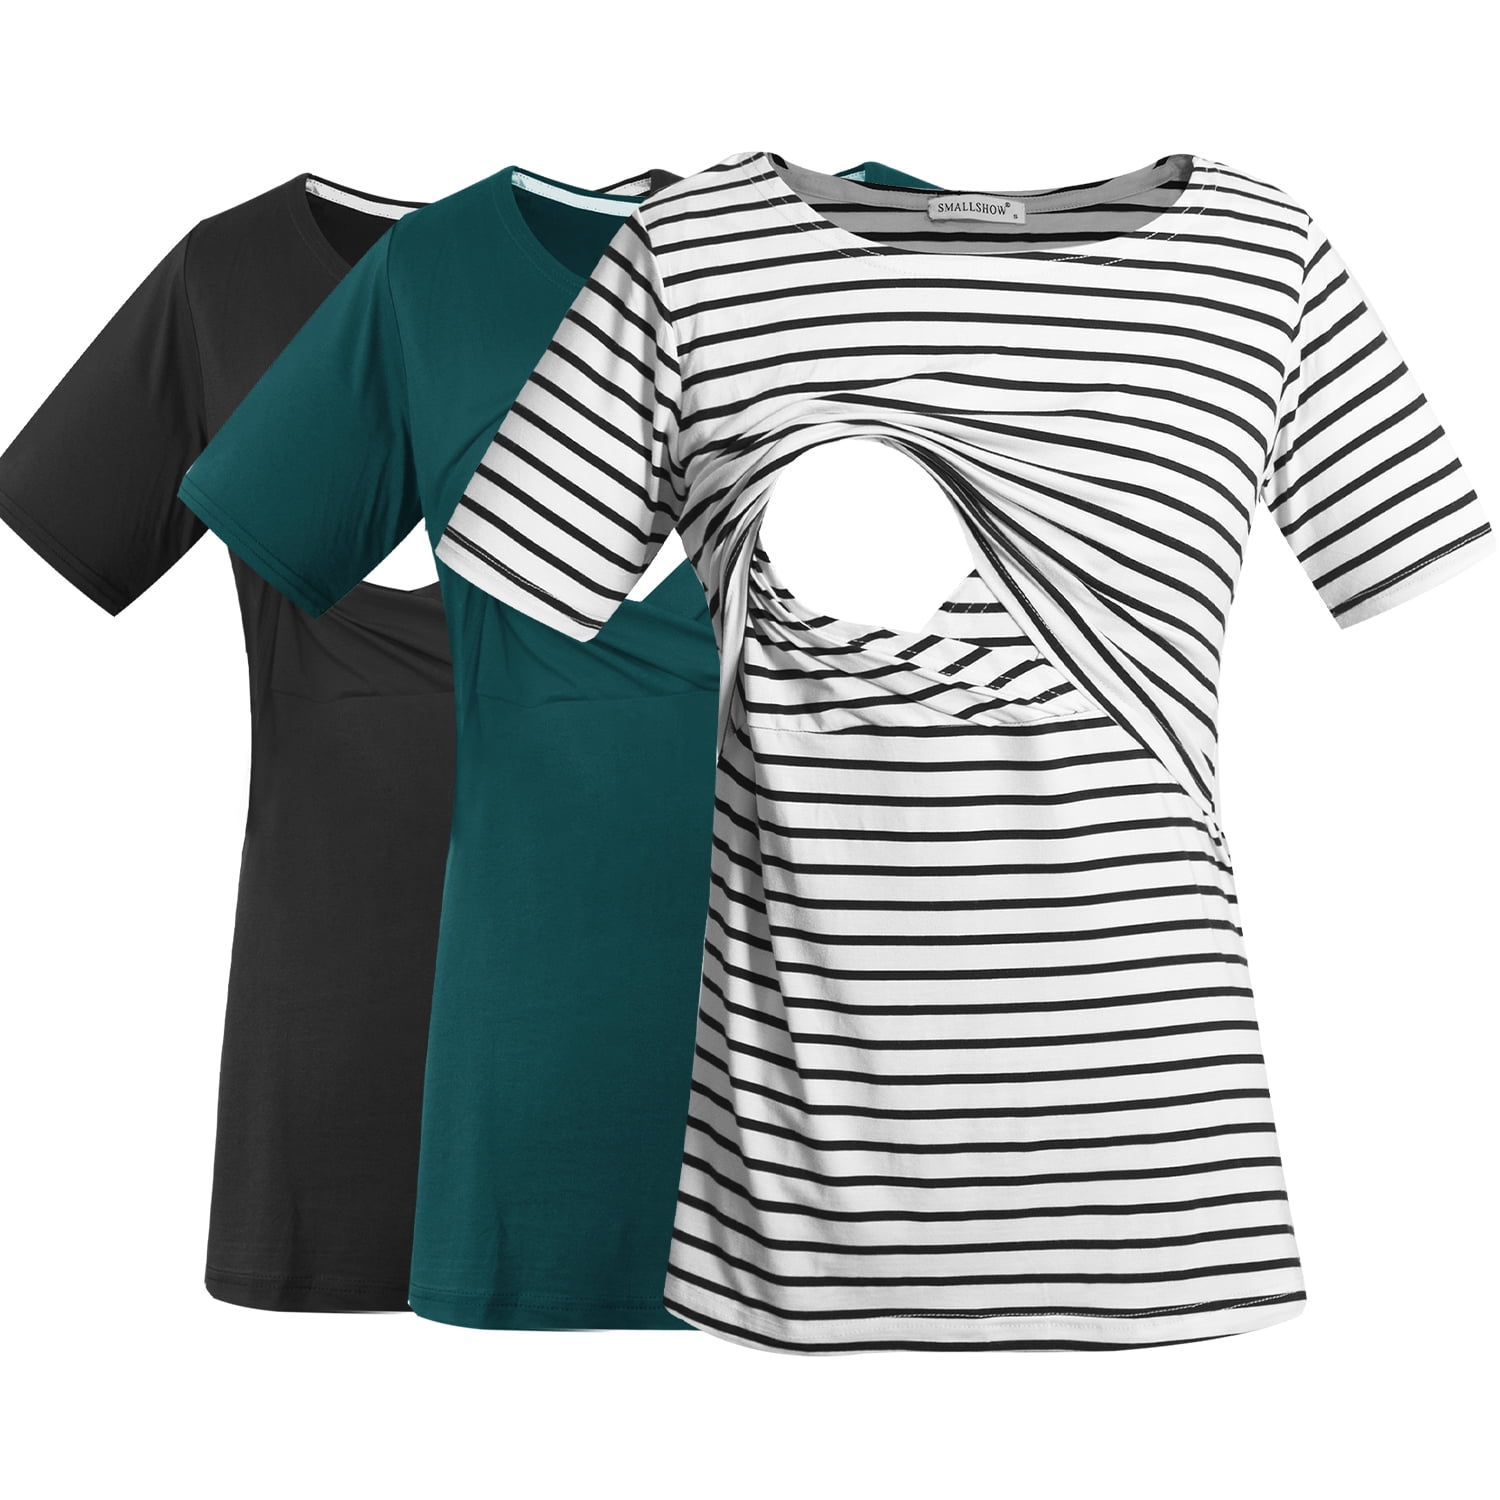 Fashion Women's Maternity Nursing T-Shirt Short Sleeve Breastfeeding Tops 3 Pack 